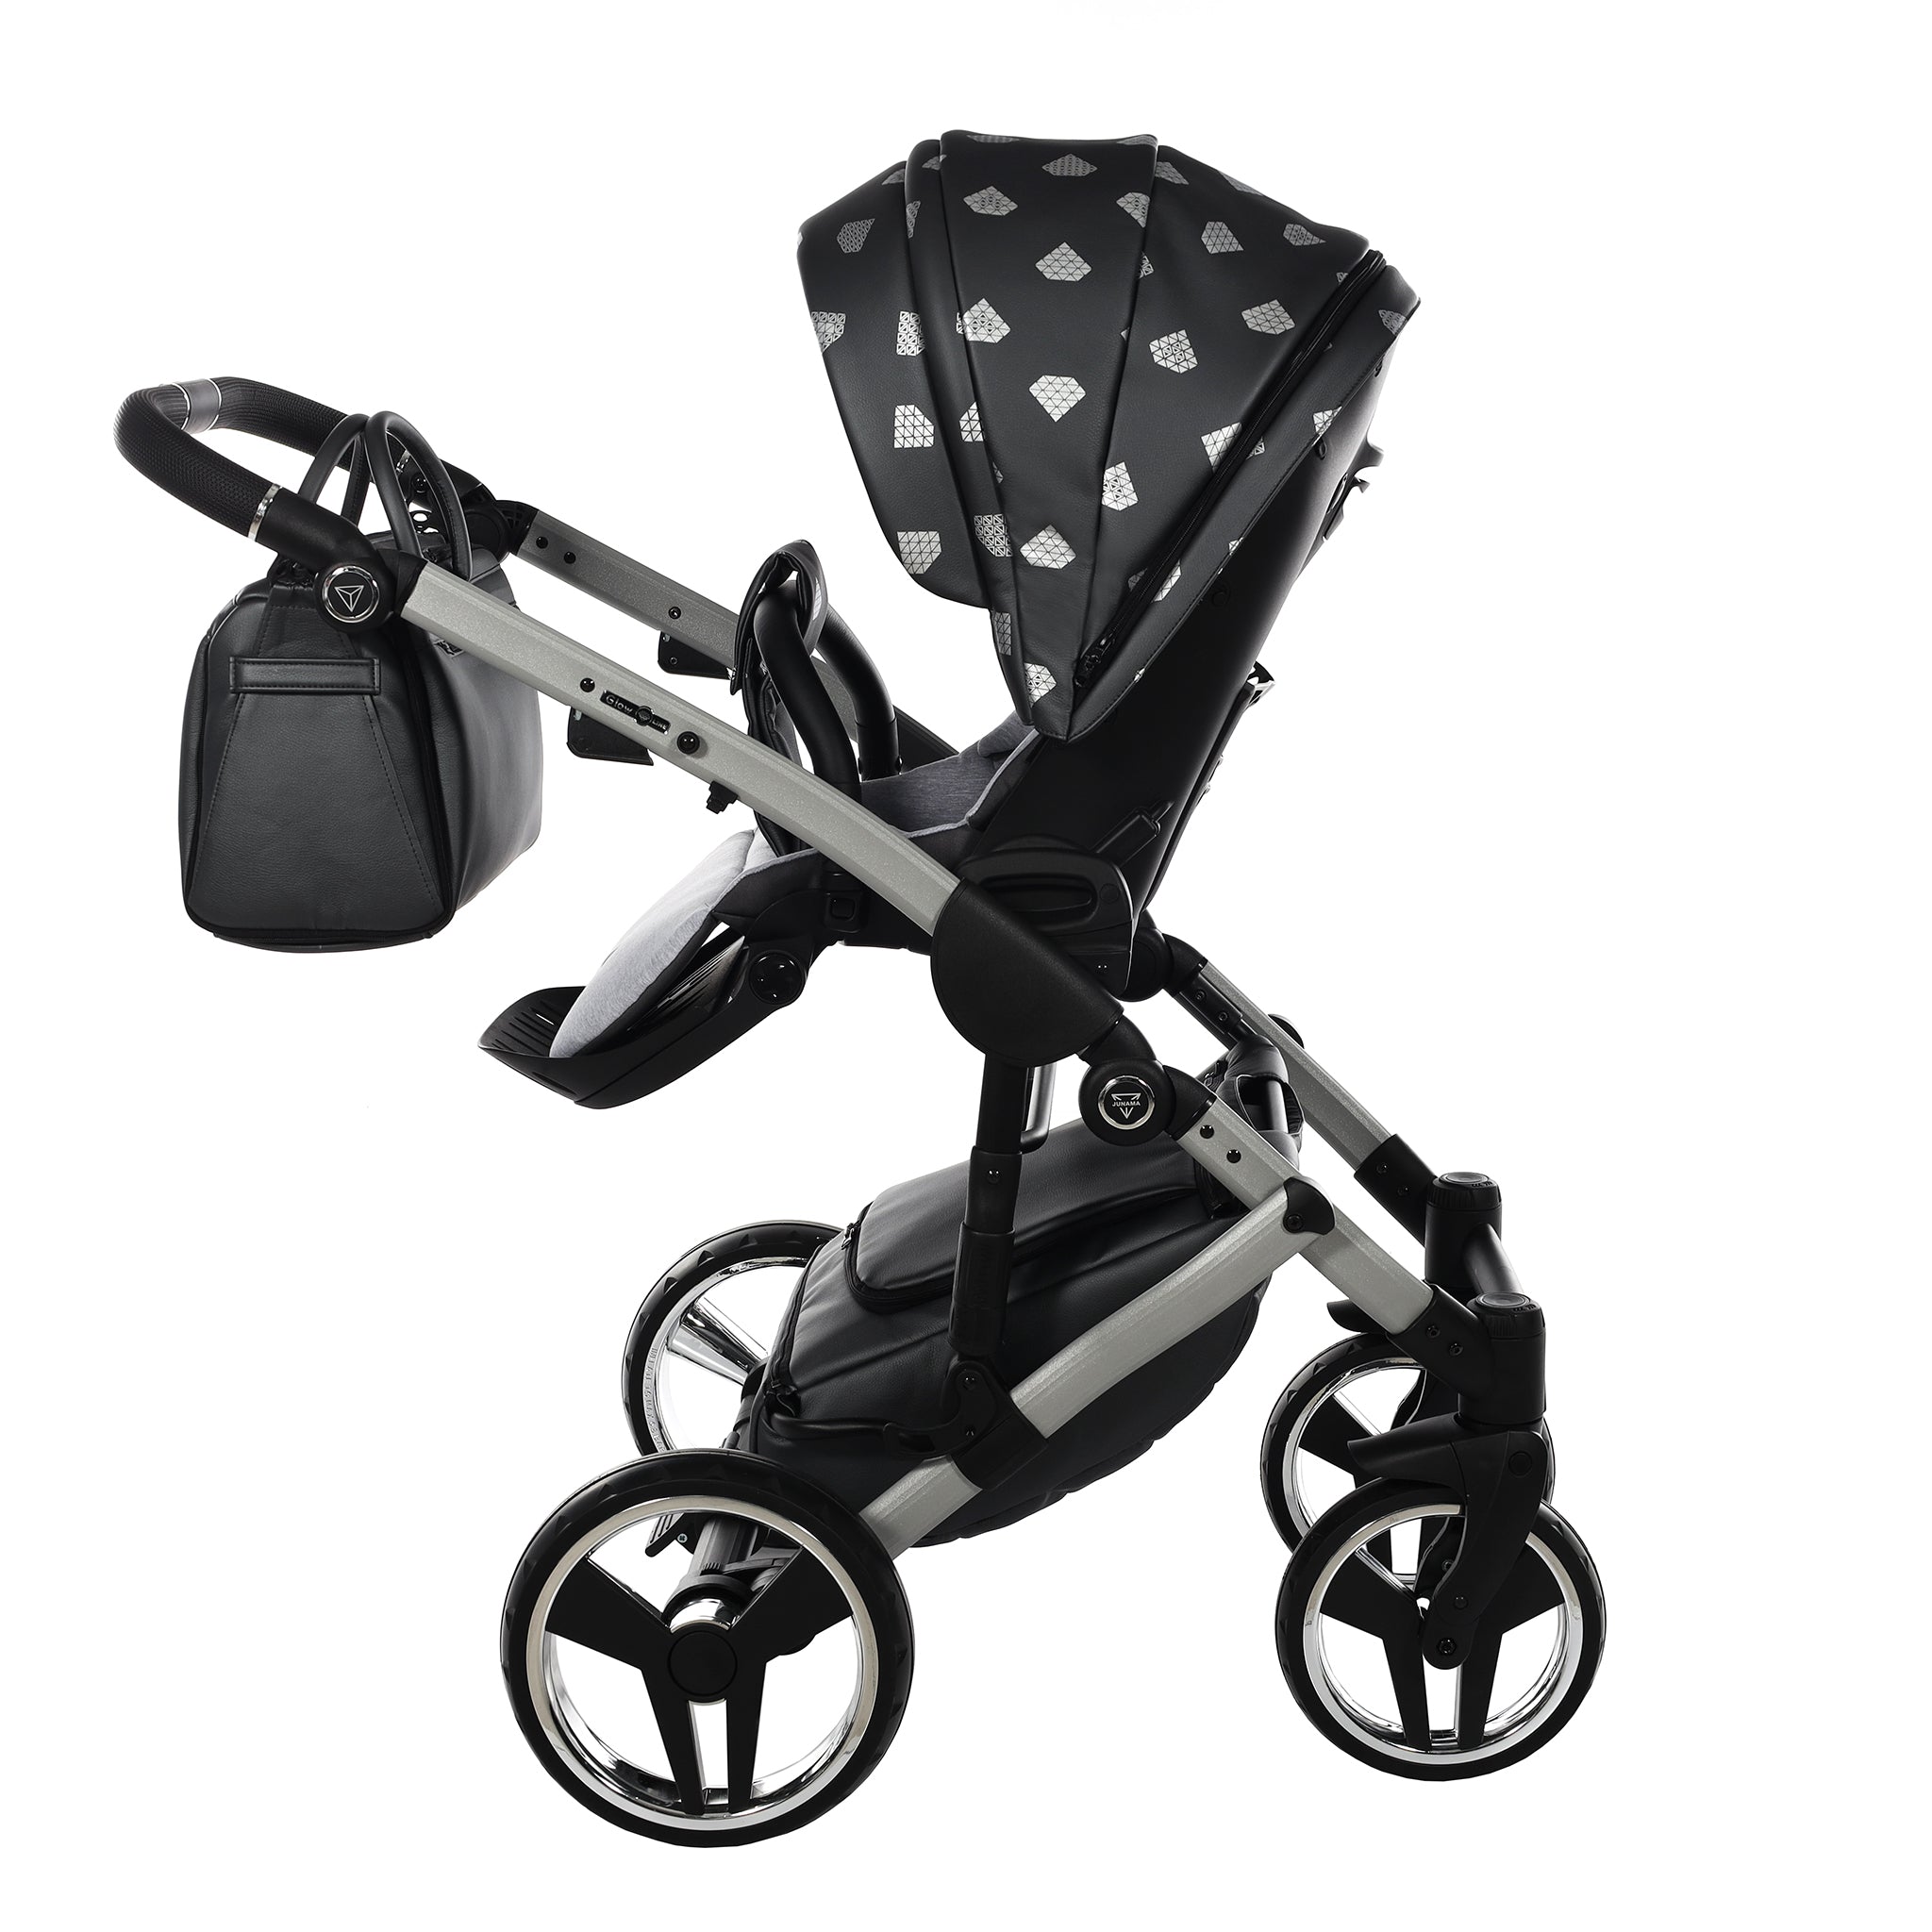 Junama GLOW, baby prams or stroller 2 in 1 - Silver and Black, Code number: JUNGLW04